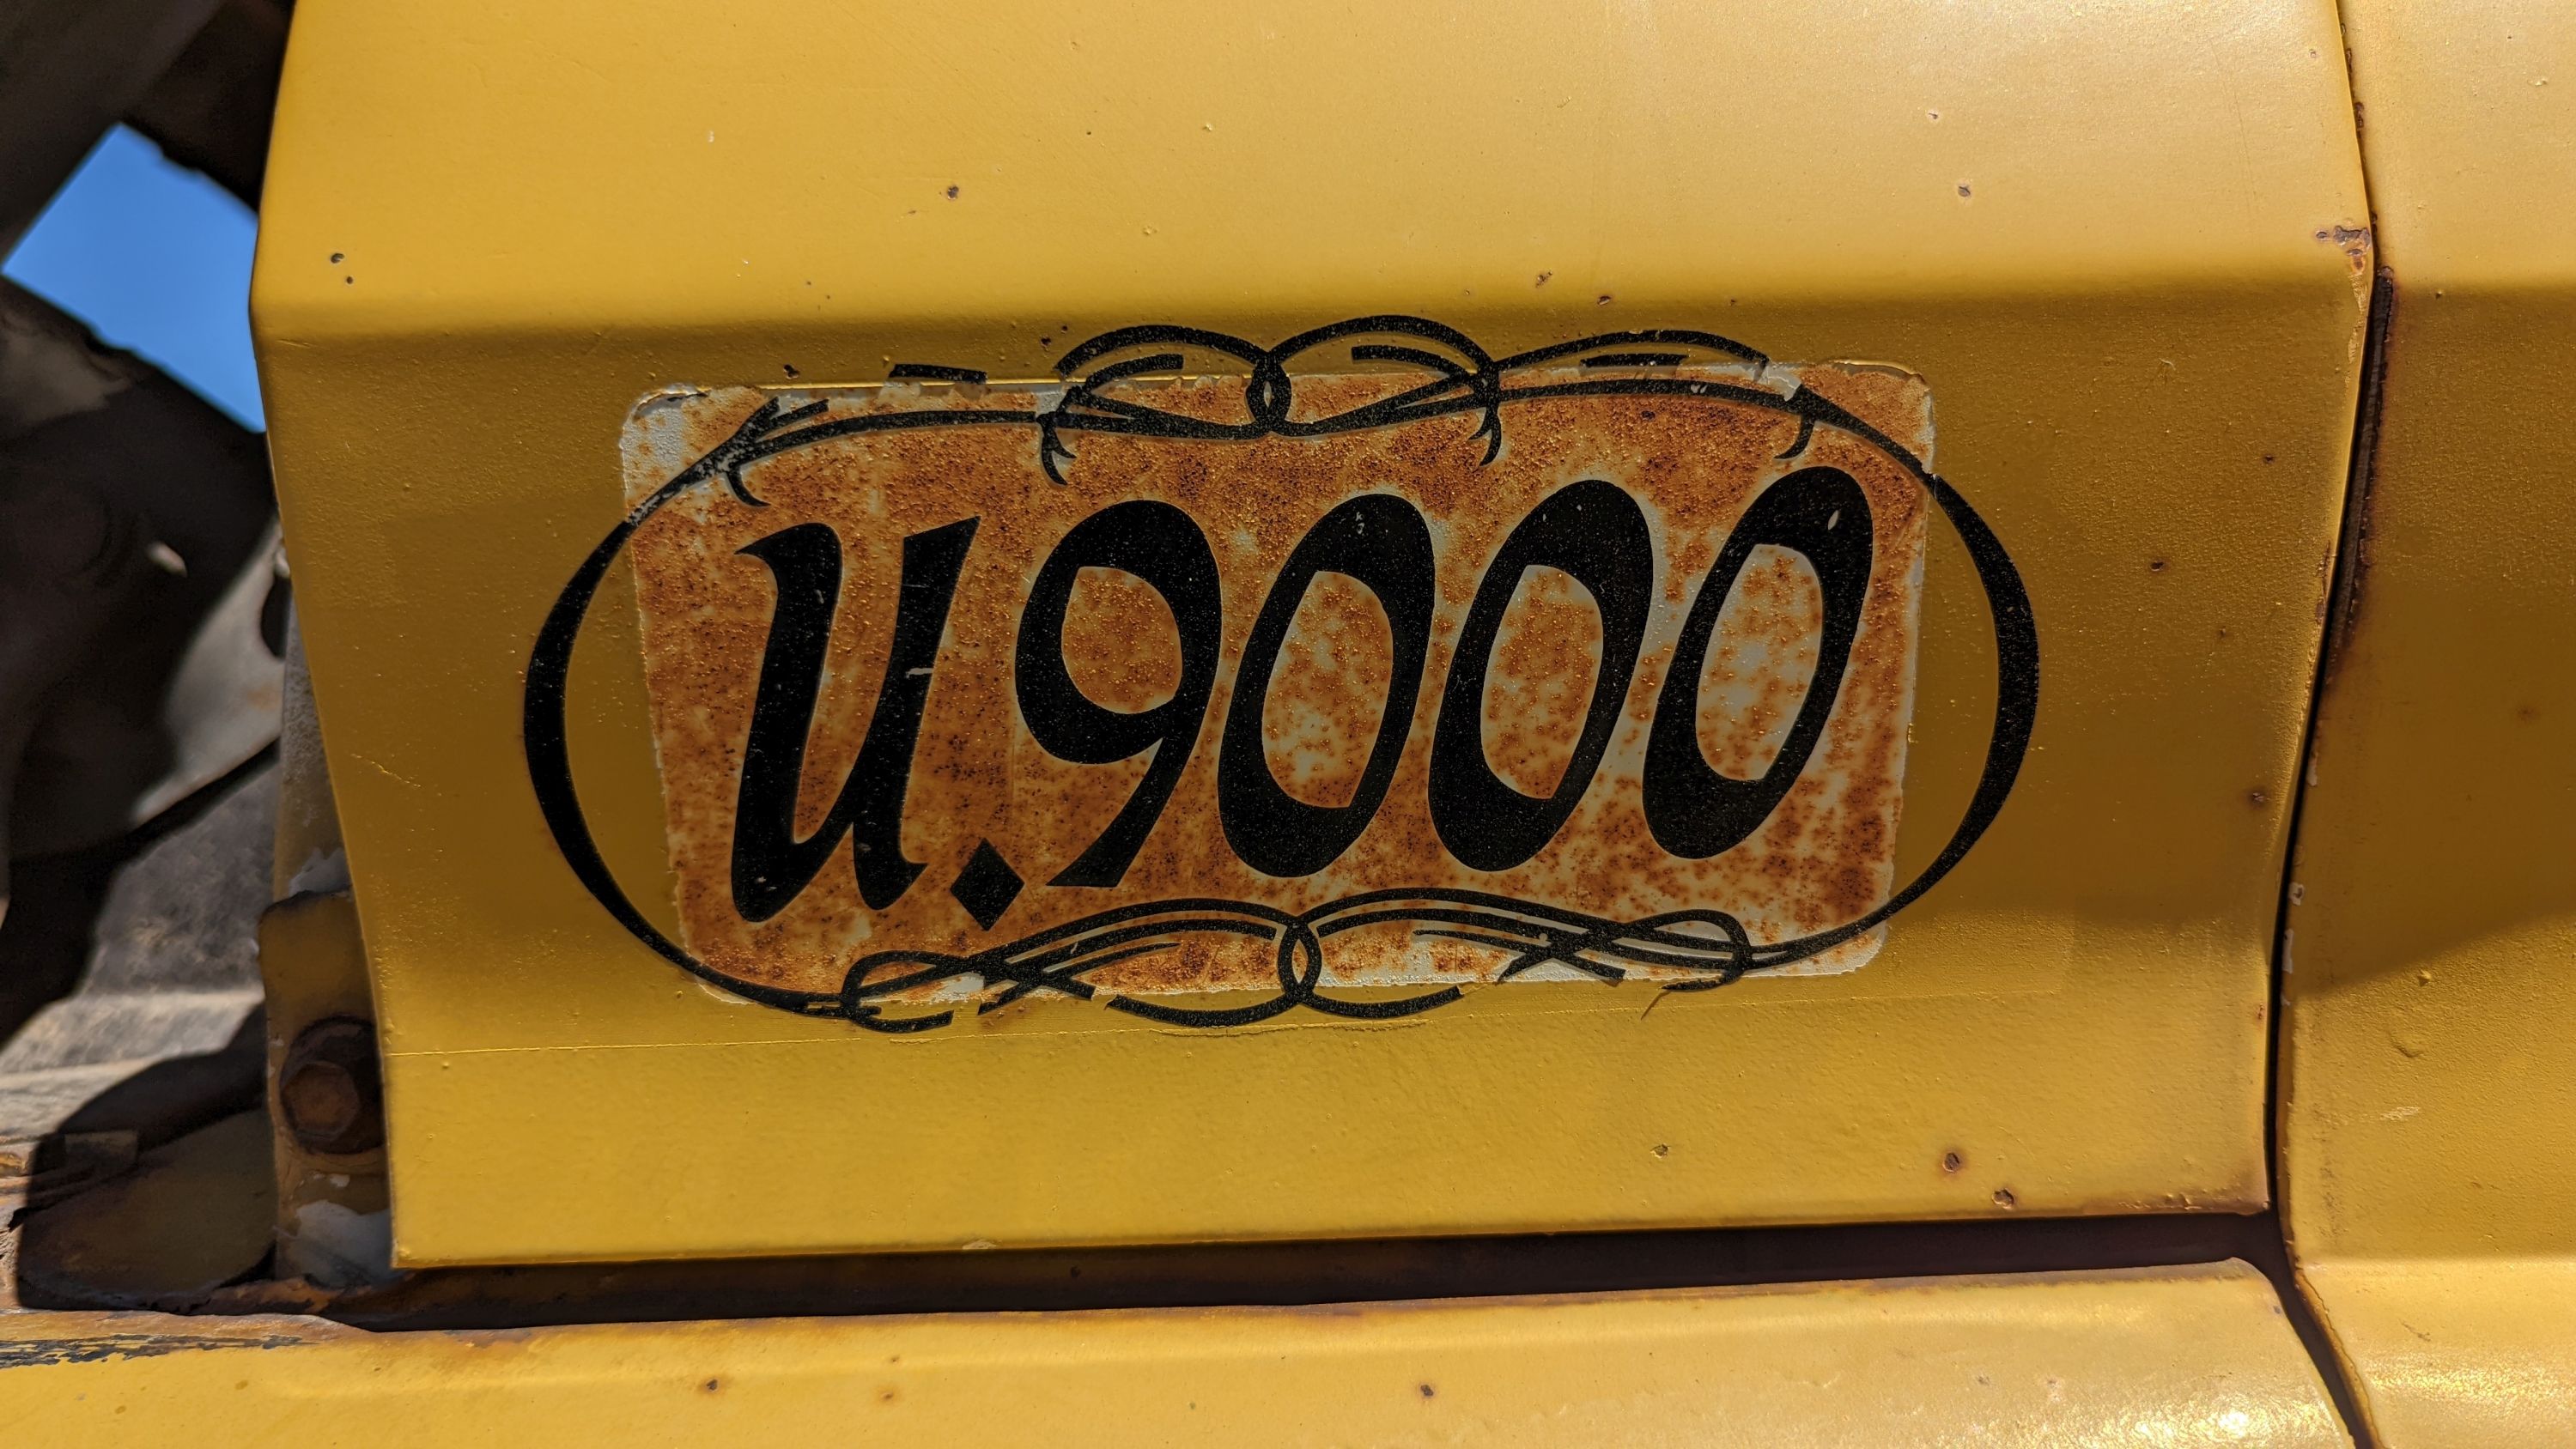 05 - 1964 Chevrolet C20 Pickup in Colorado junkyard - Photo by Murilee Martin